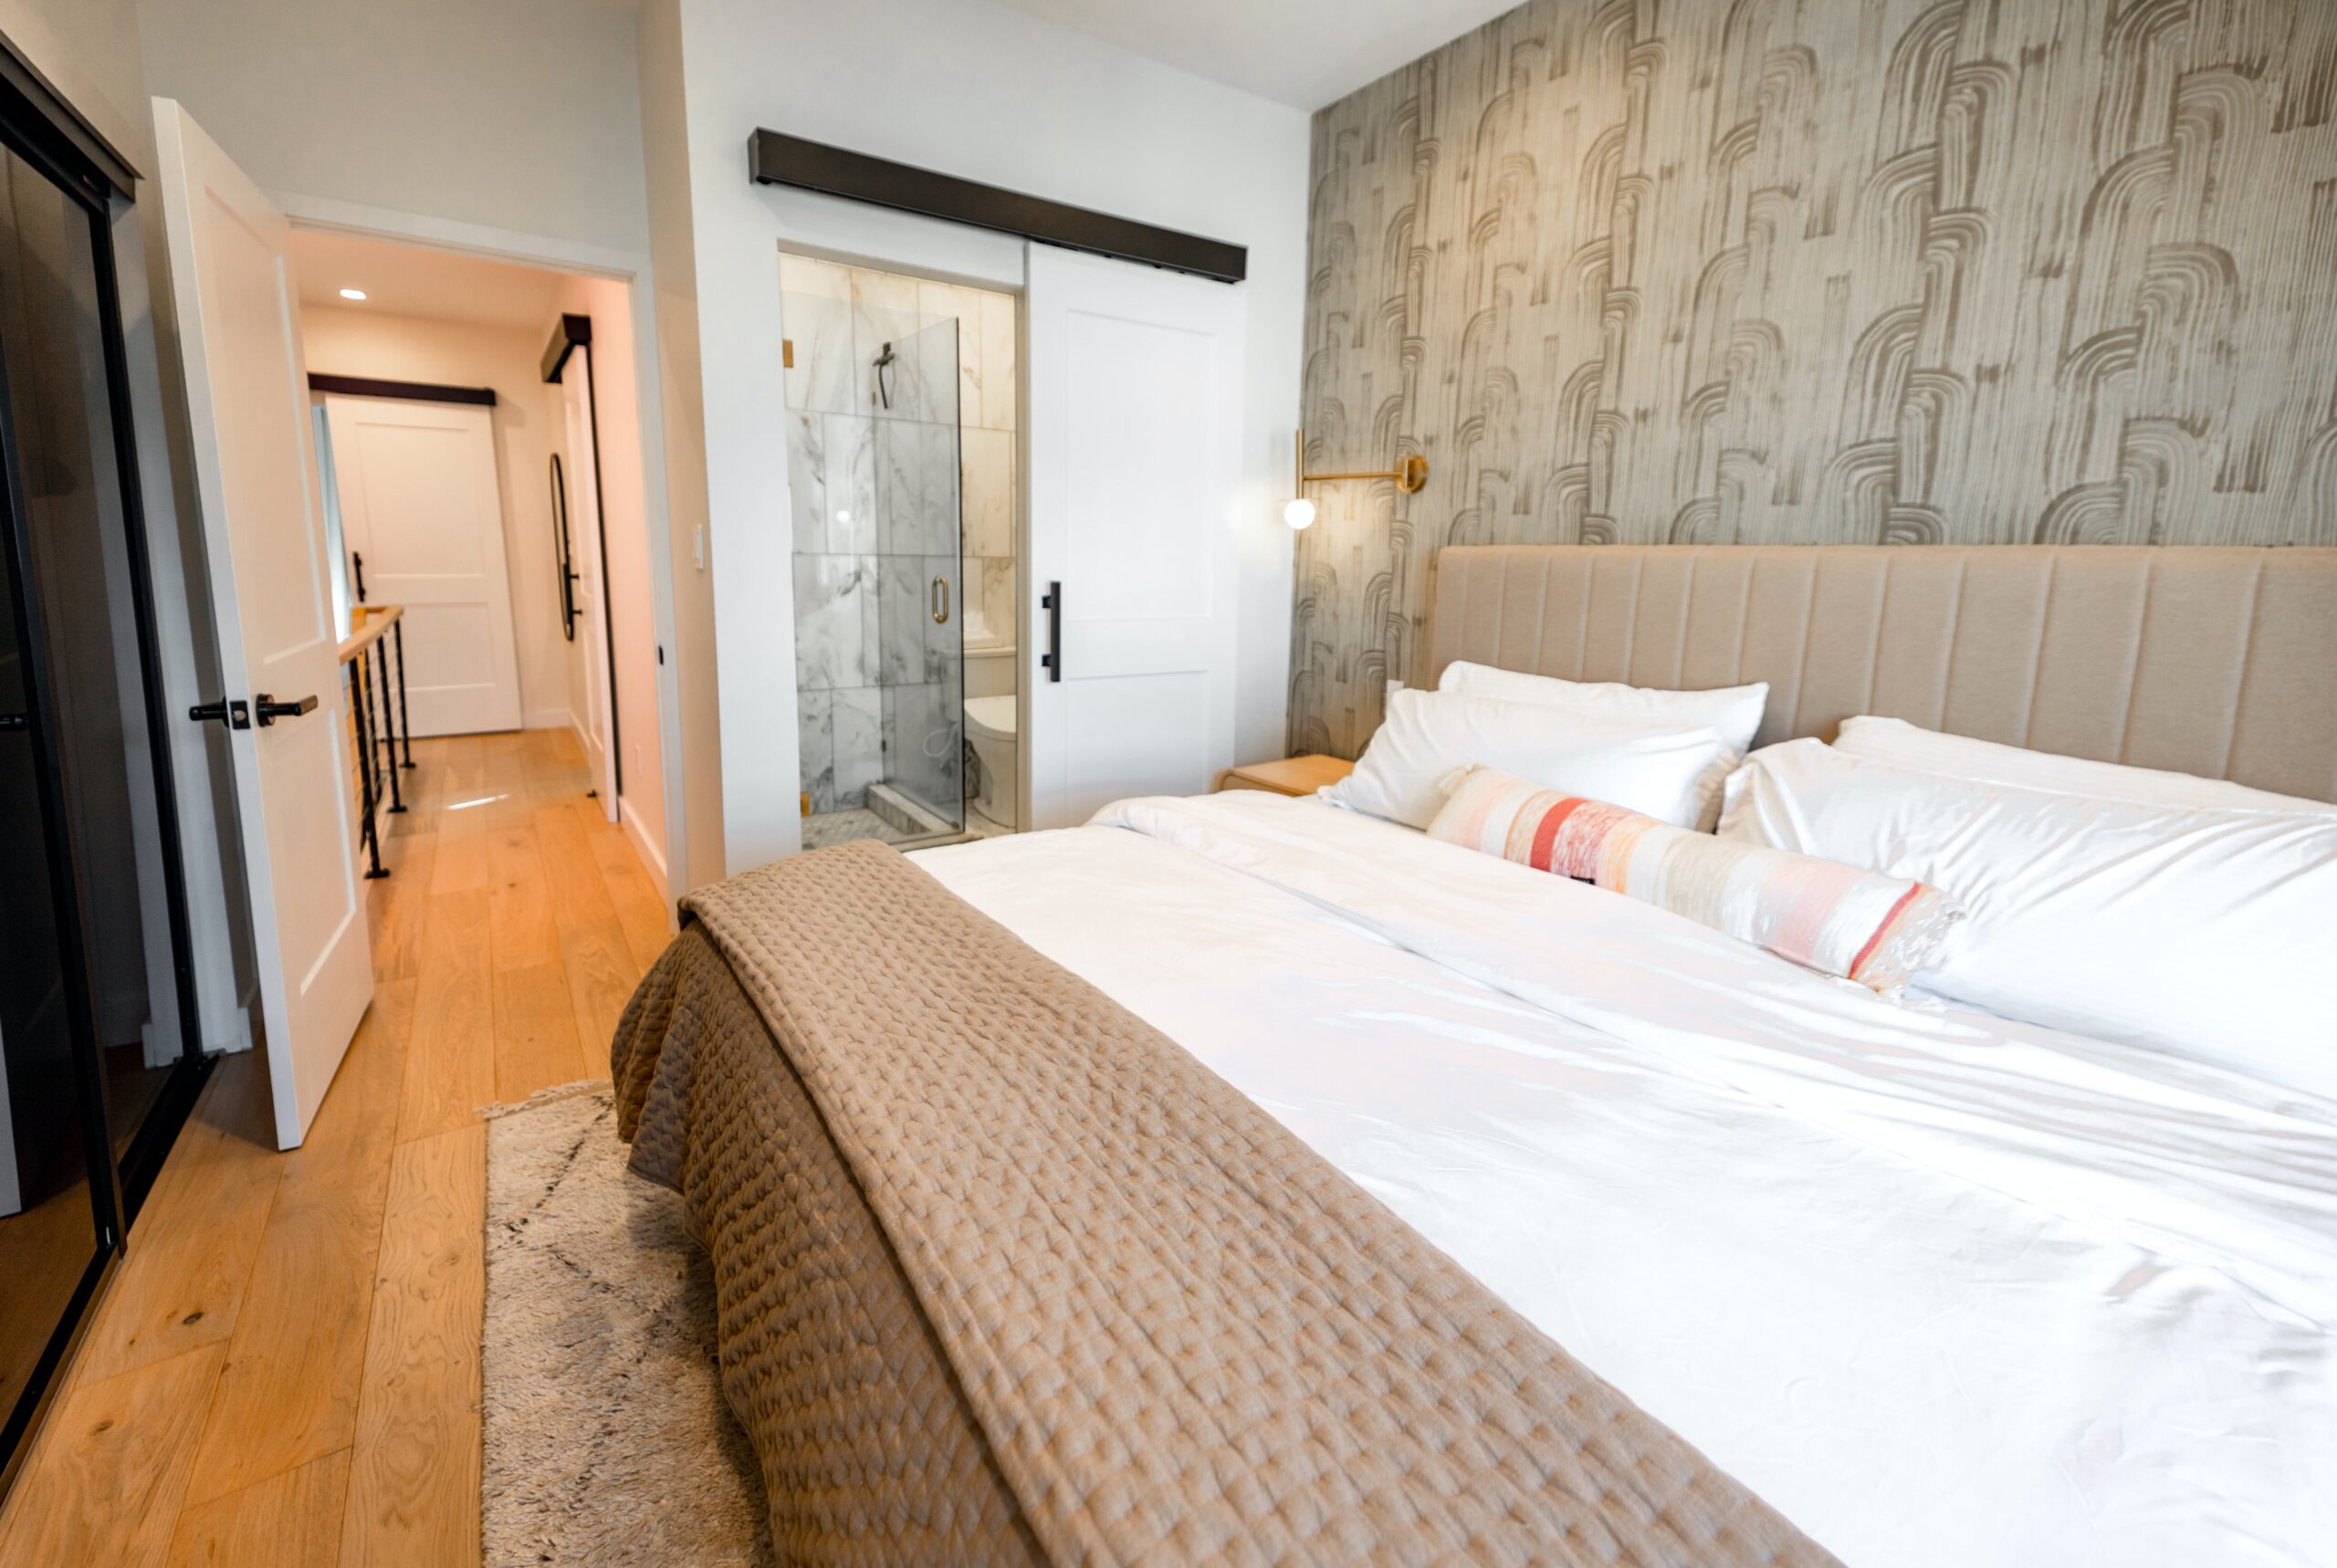 Inviting modern boho bedroom in vacation rental